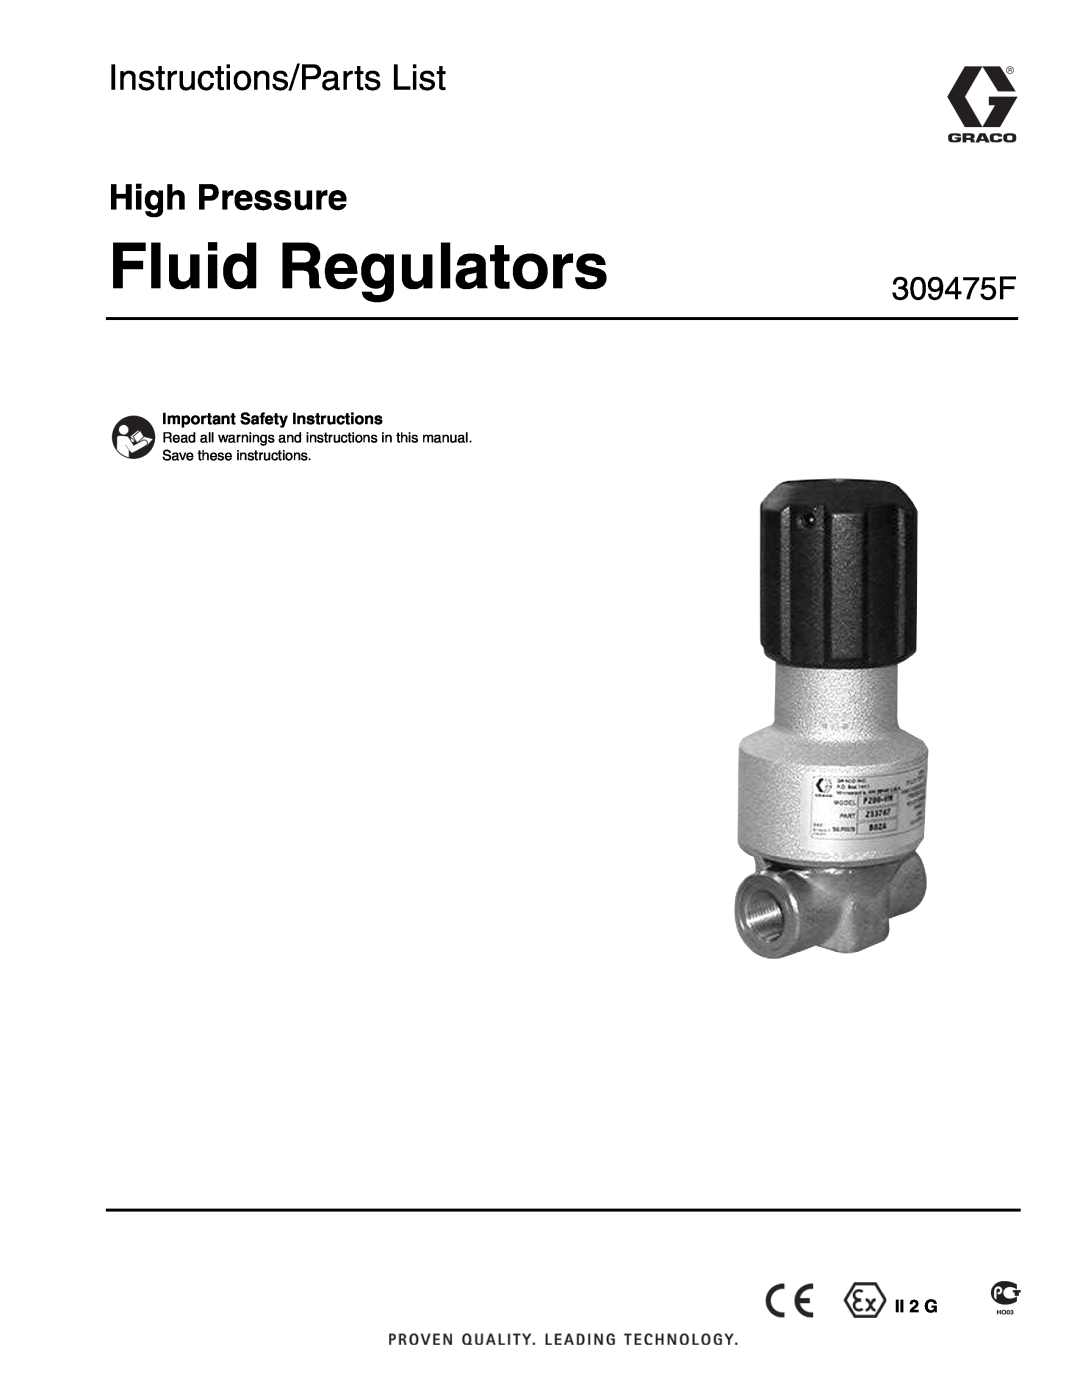 Graco Inc 309475F important safety instructions Fluid Regulators, Instructions/Parts List, High Pressure 